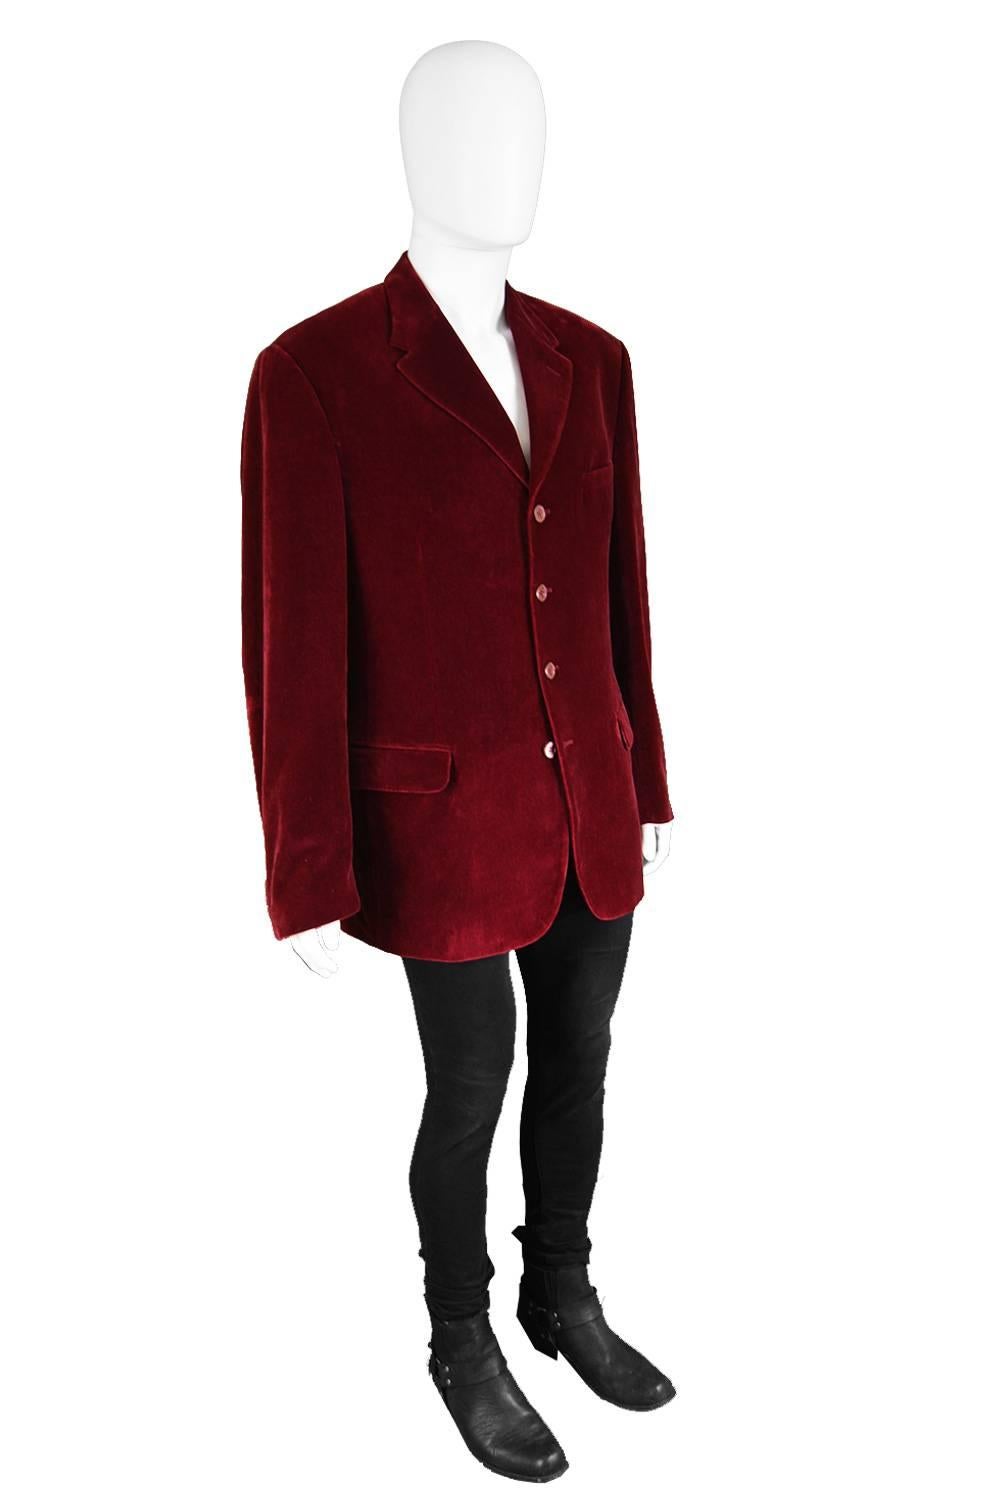 Gianni Versace Versus Men's Dark Red Velvet Vintage Blazer Jacket, 1990s In Excellent Condition For Sale In Doncaster, South Yorkshire